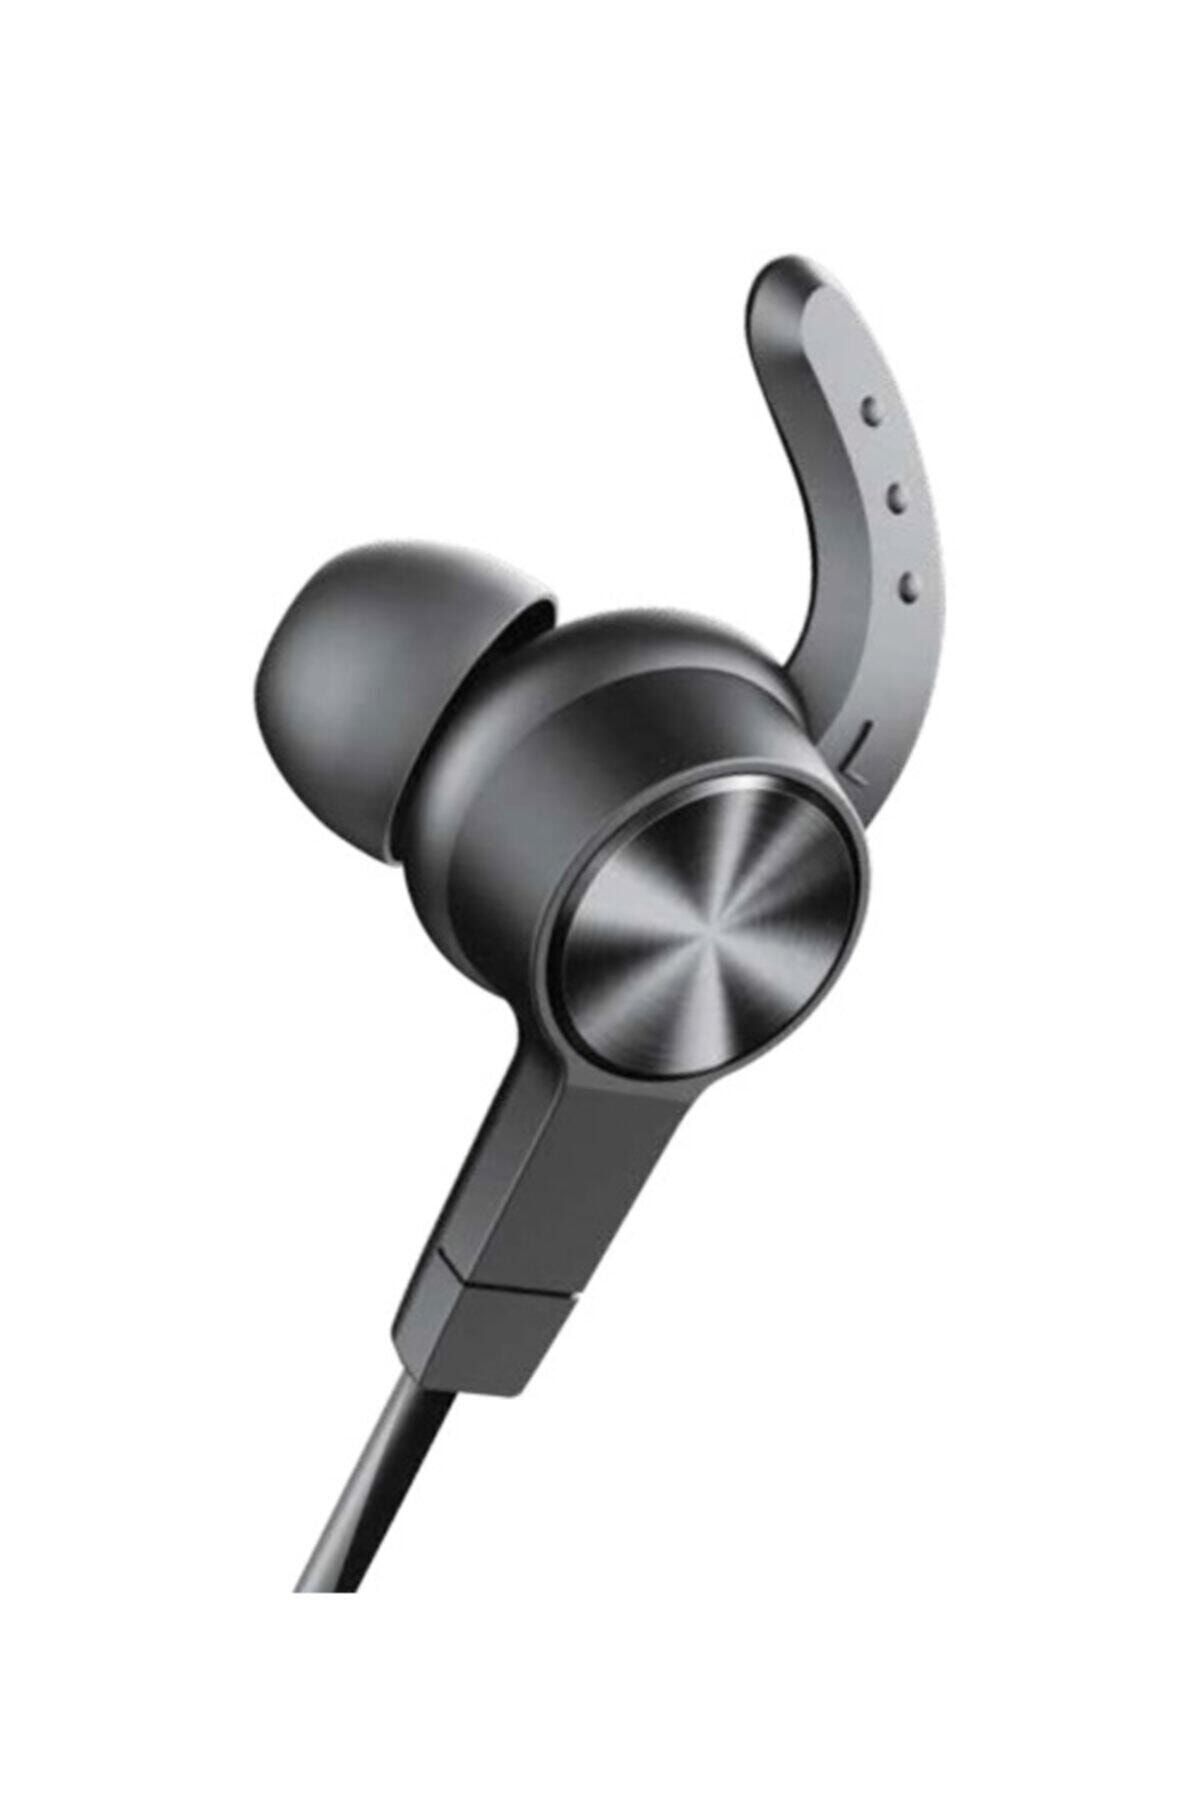 Syrox S32 Bluetooth Mıknatıslı Kulakiçi Spor Kulaklık Siyah Renk